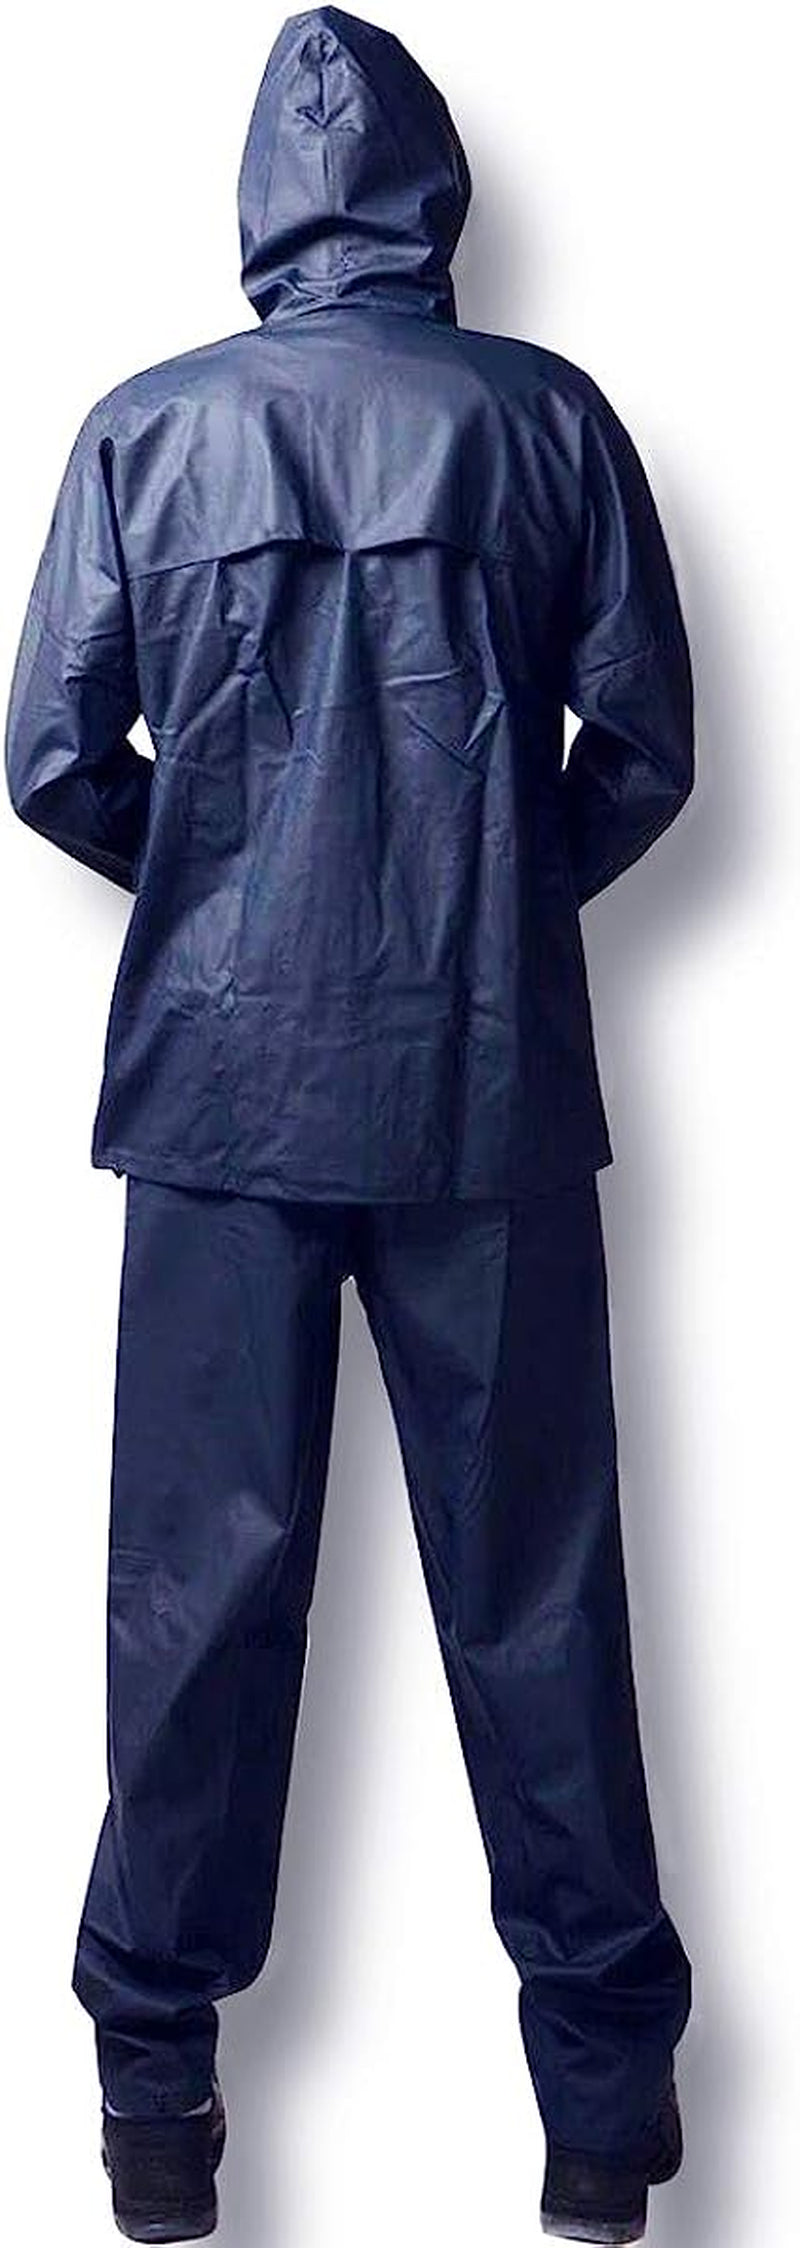 Men's Ultra-lite Waterproof Rain Suit for Golf,Hiking,Travel Running